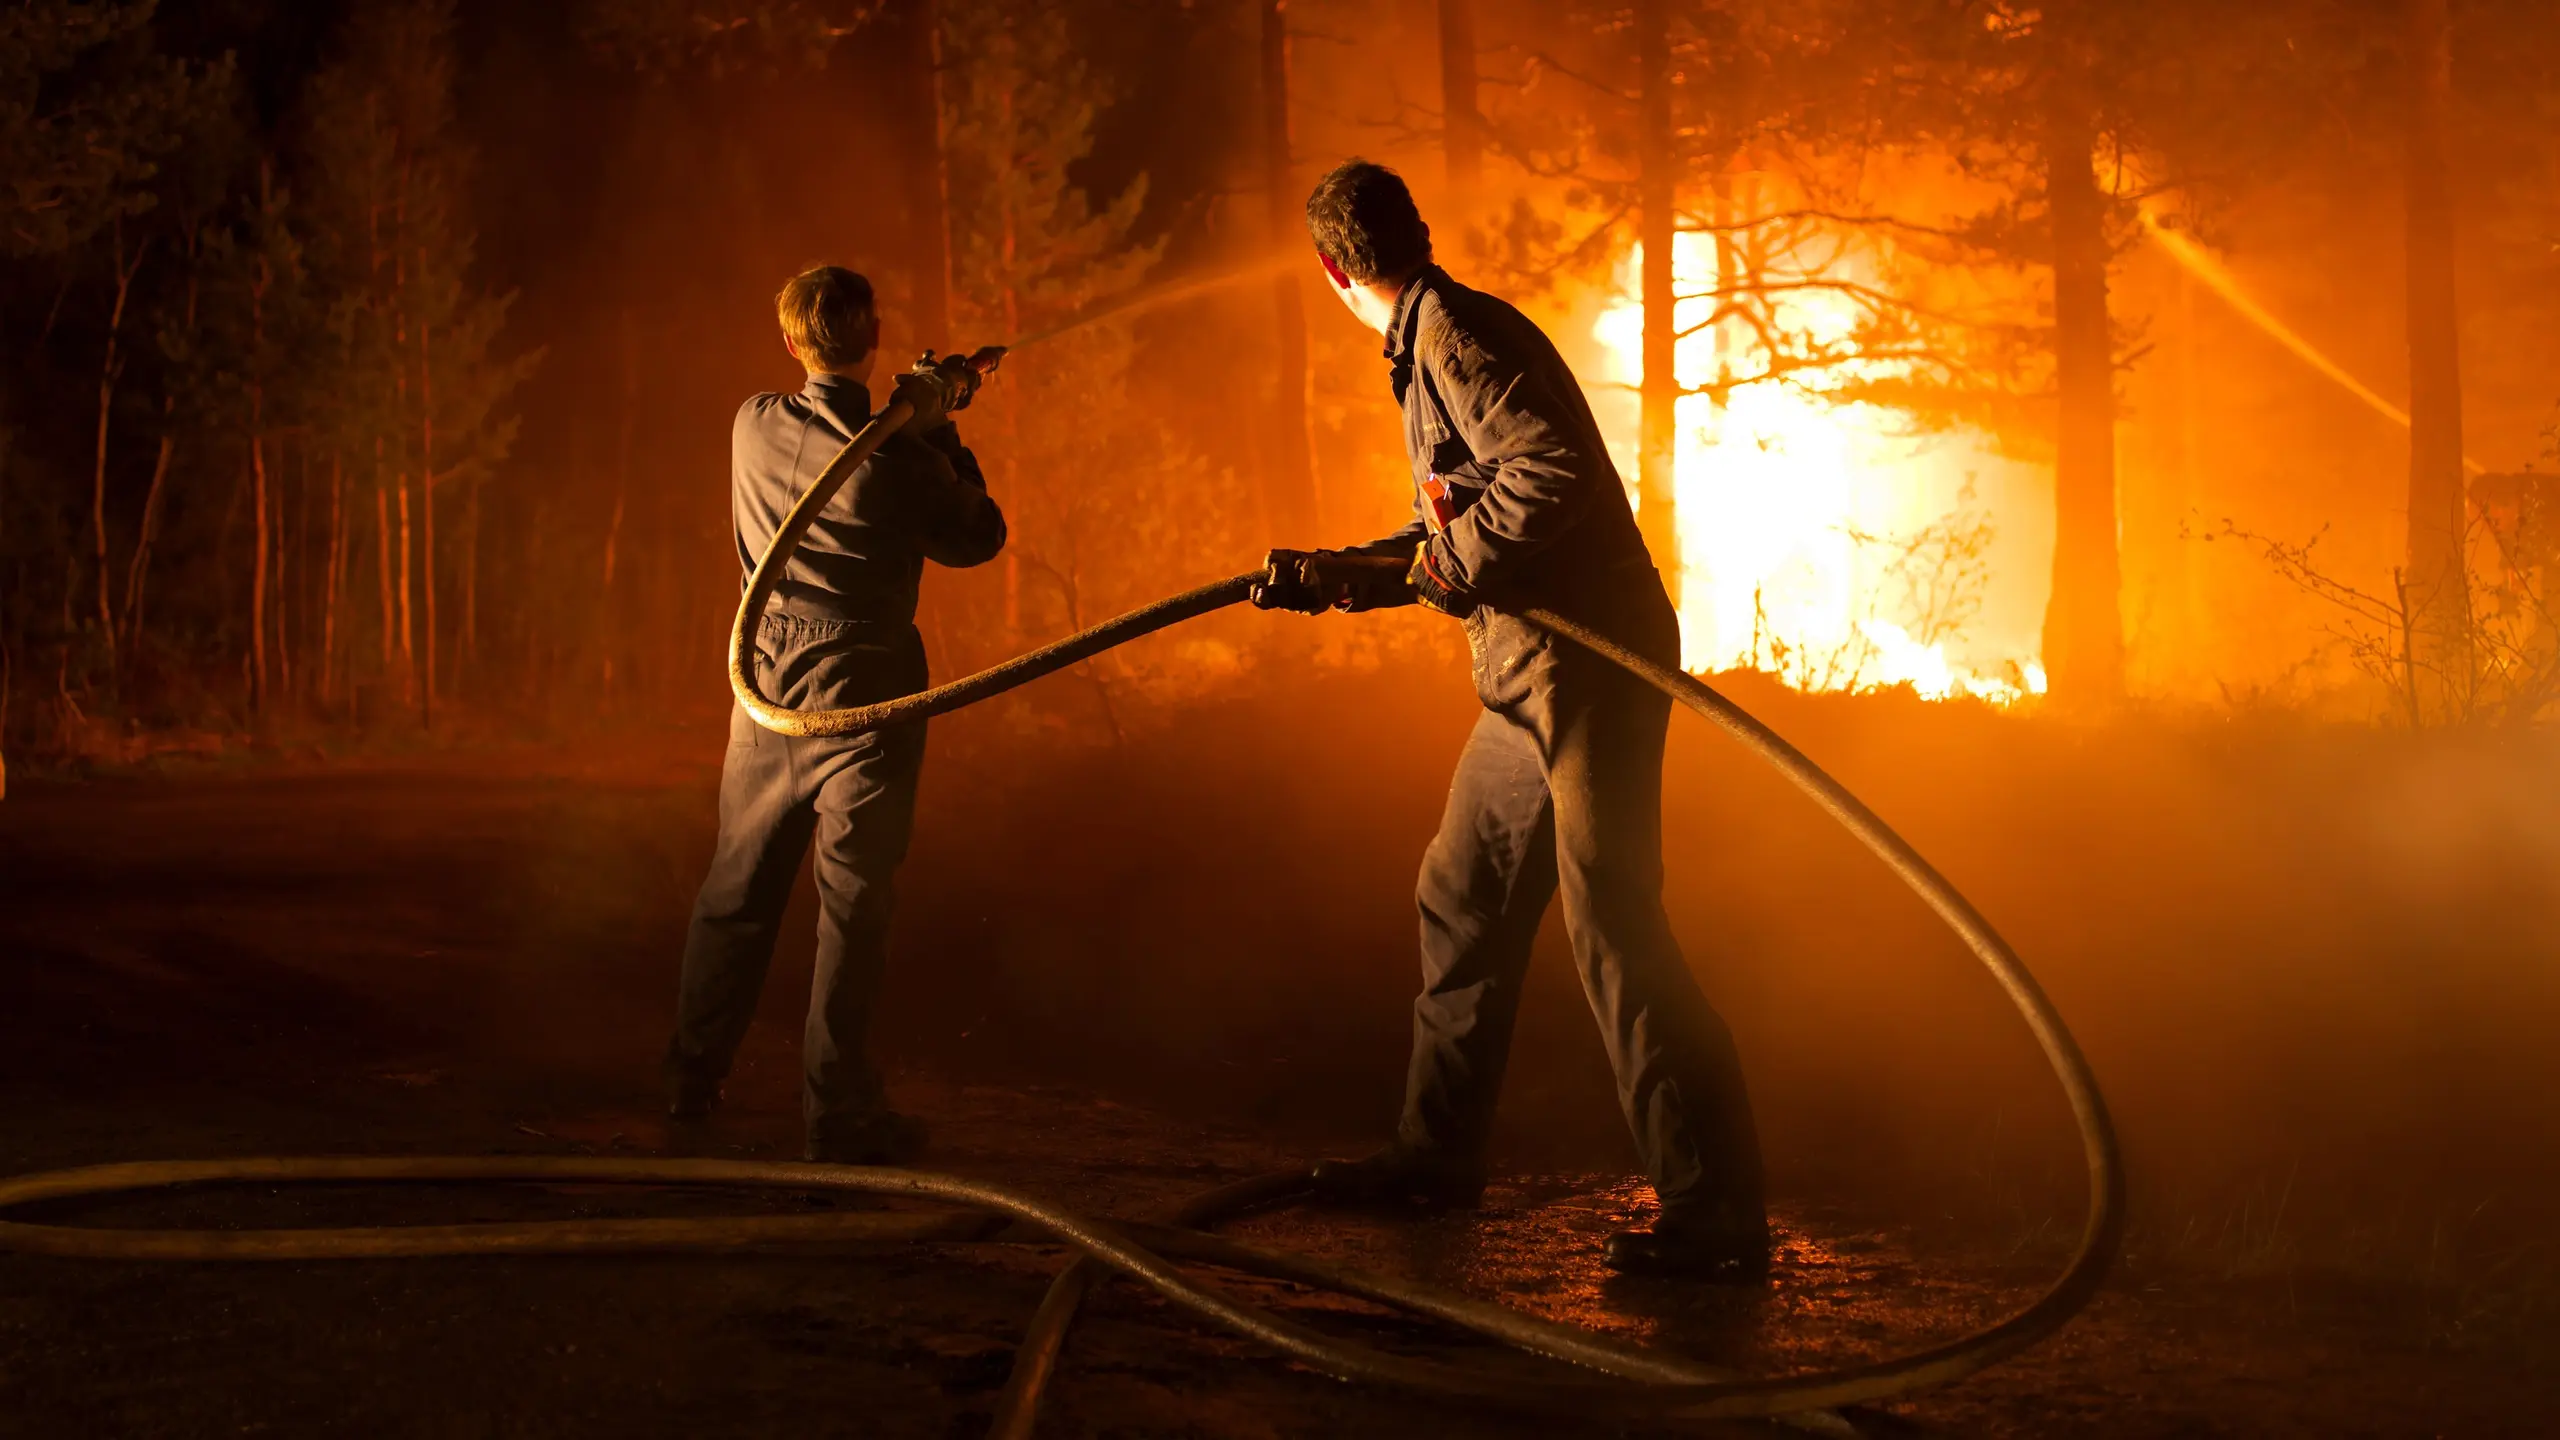 Pyromaniac – Bevor ich verbrenne